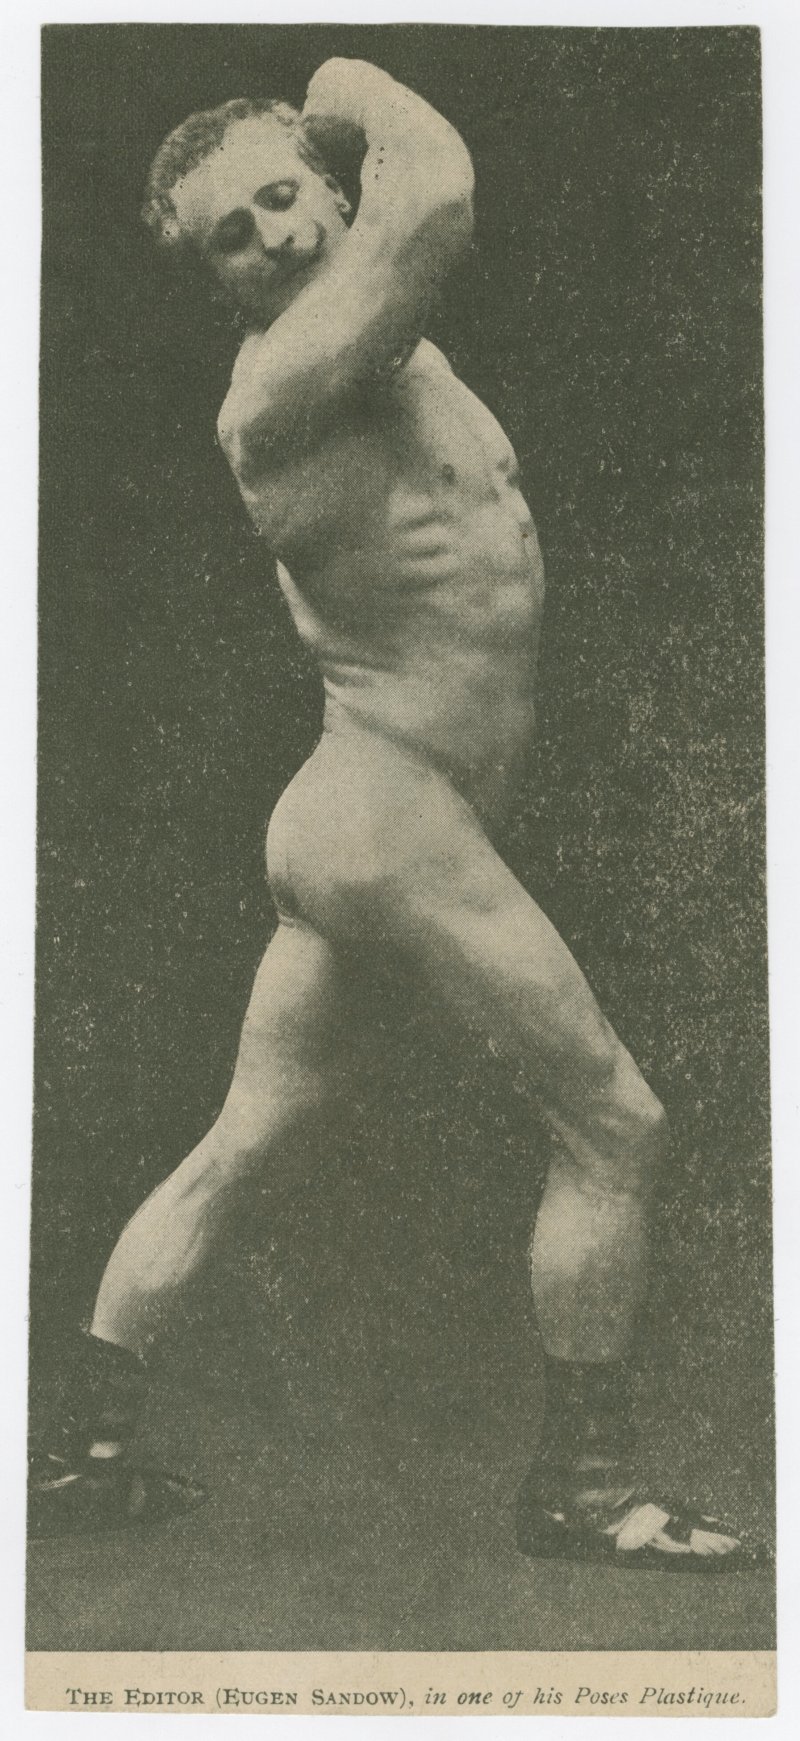 Eugen Sandow in one of his poses plastique